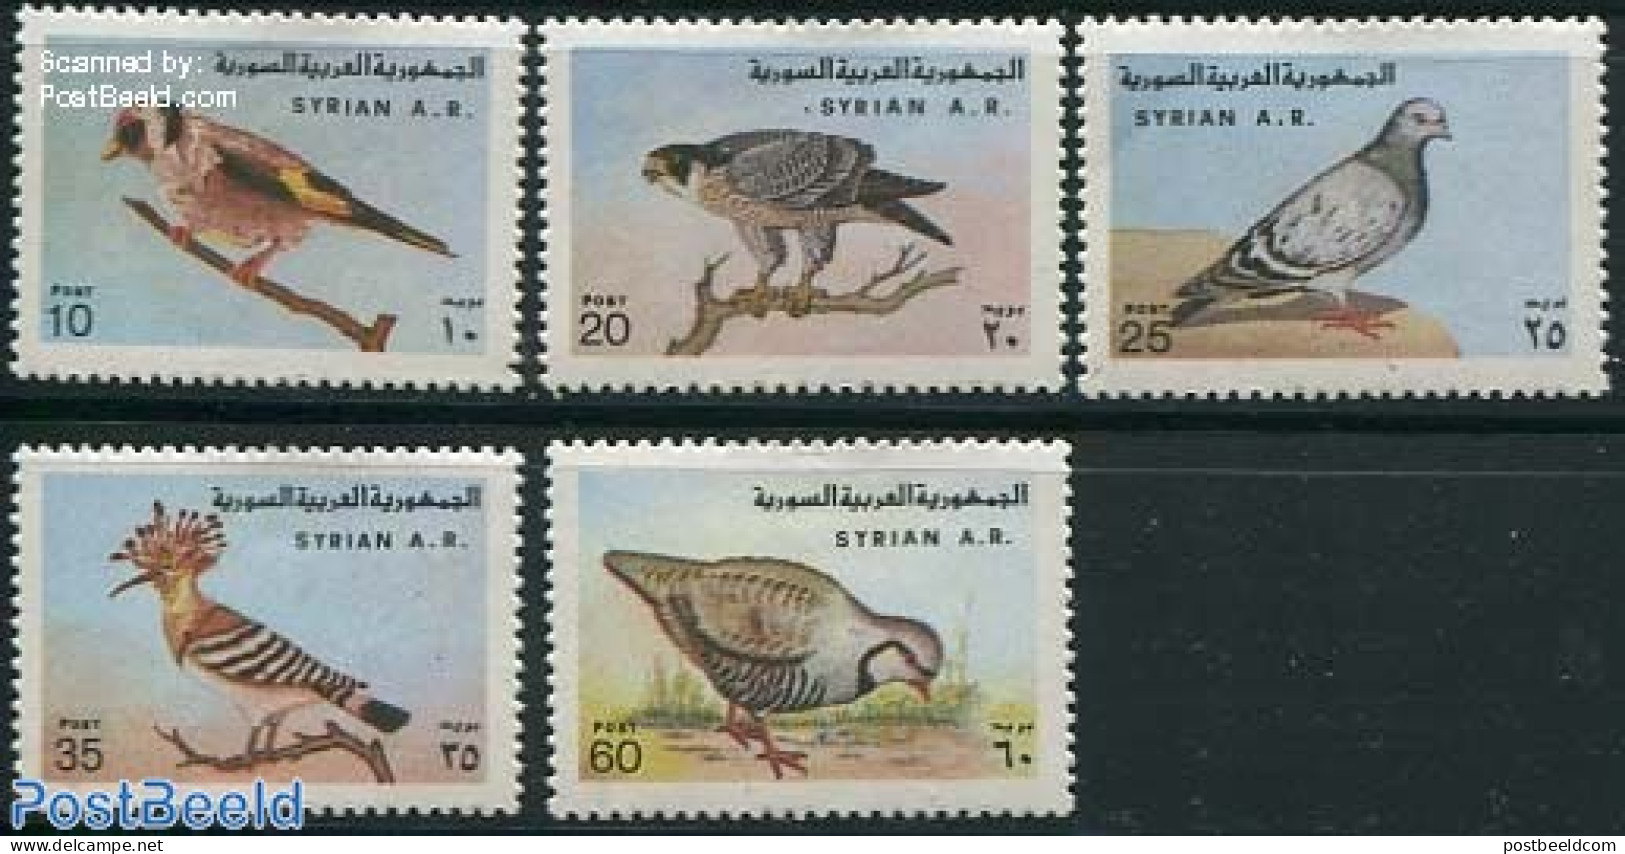 Syria 1978 Birds 5v, Mint NH, Nature - Birds - Pigeons - Syria